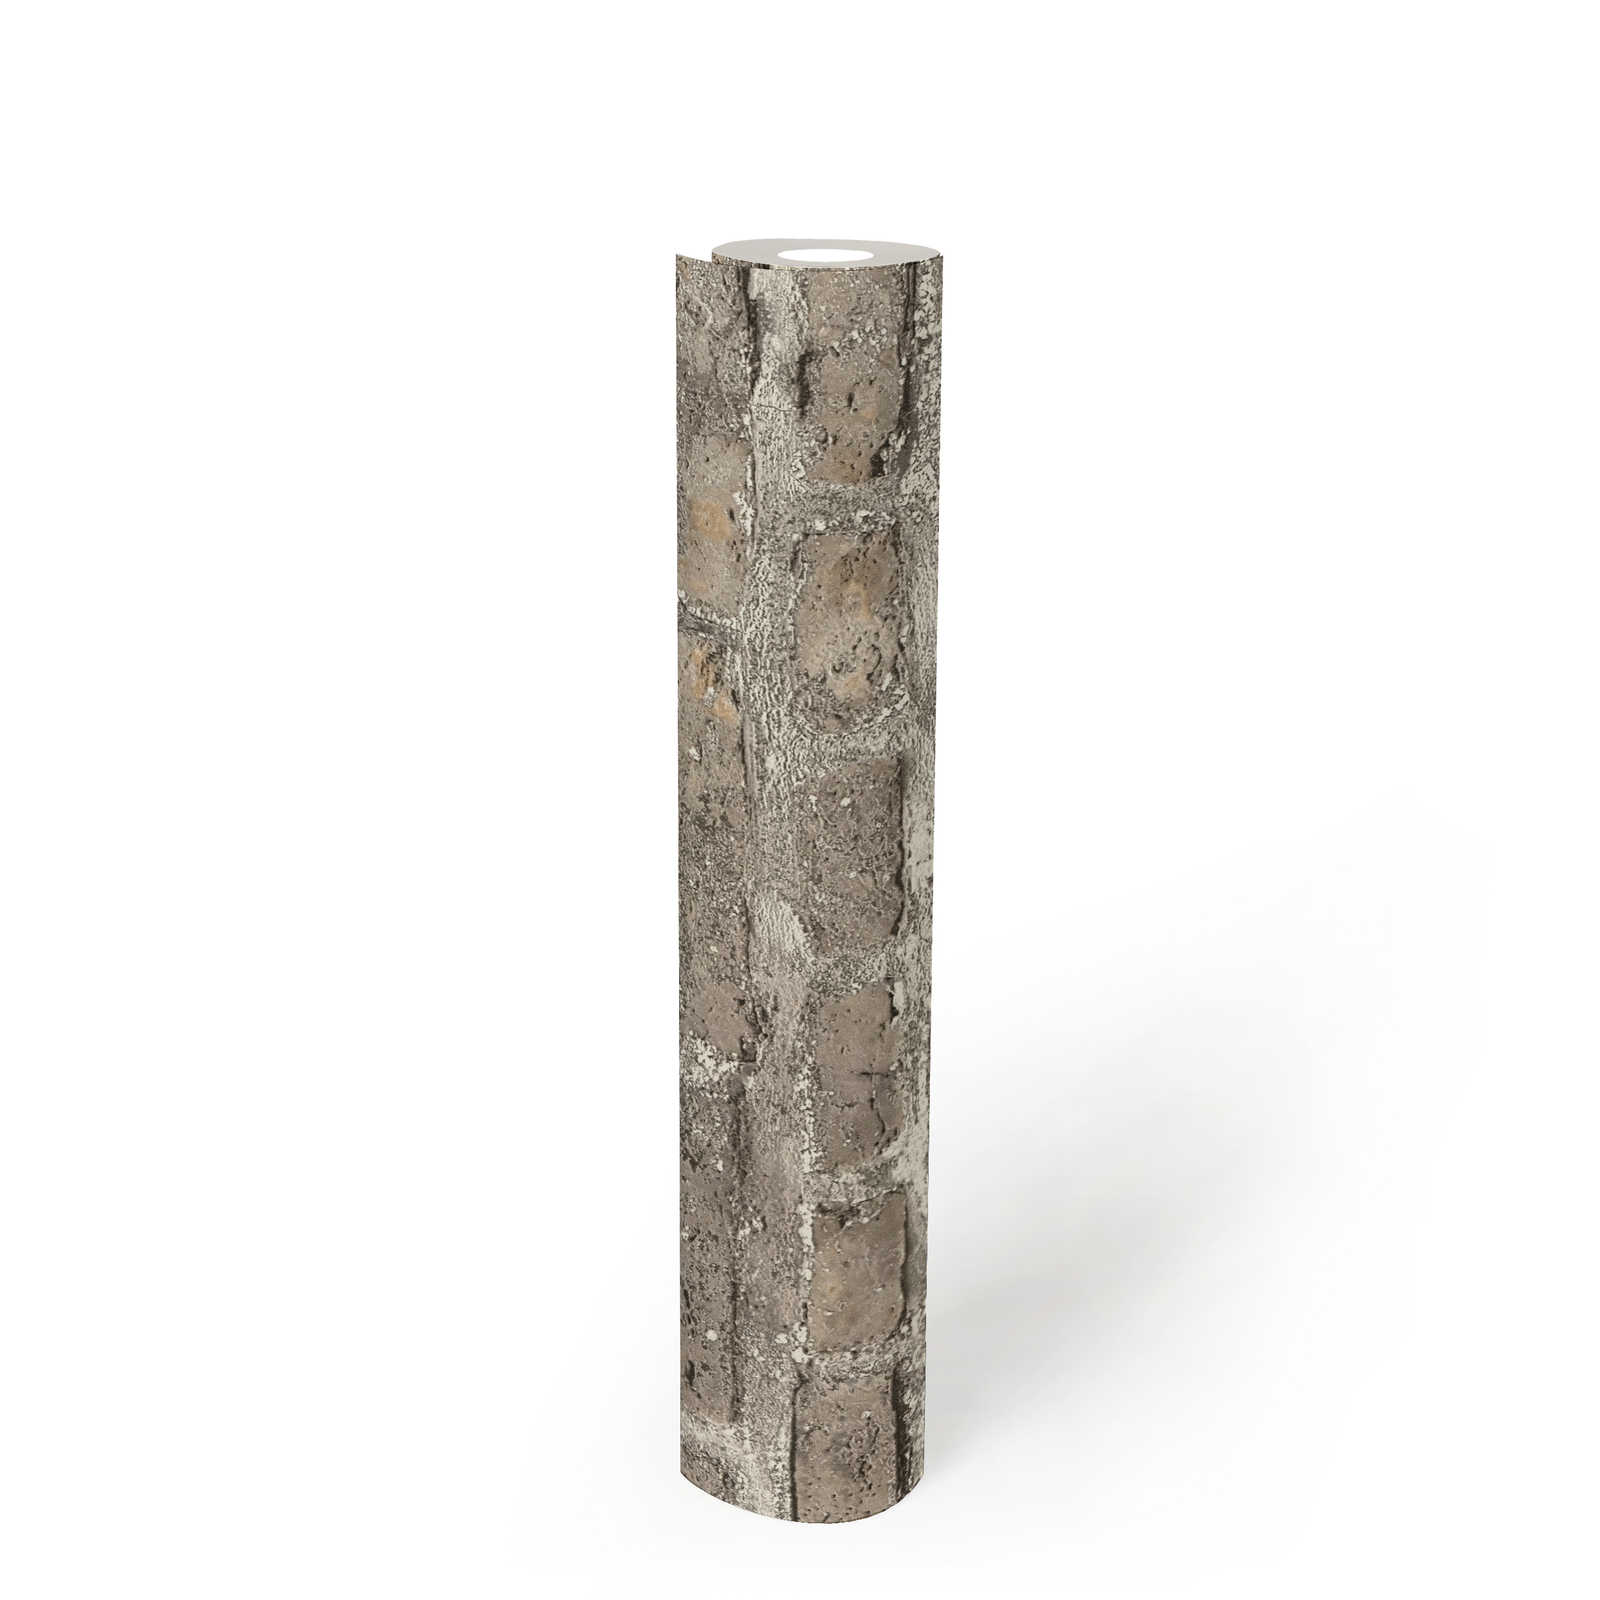             Tapete mit rustikalem Mauer-Motiv im Industrial Style – Grau, Braun
        